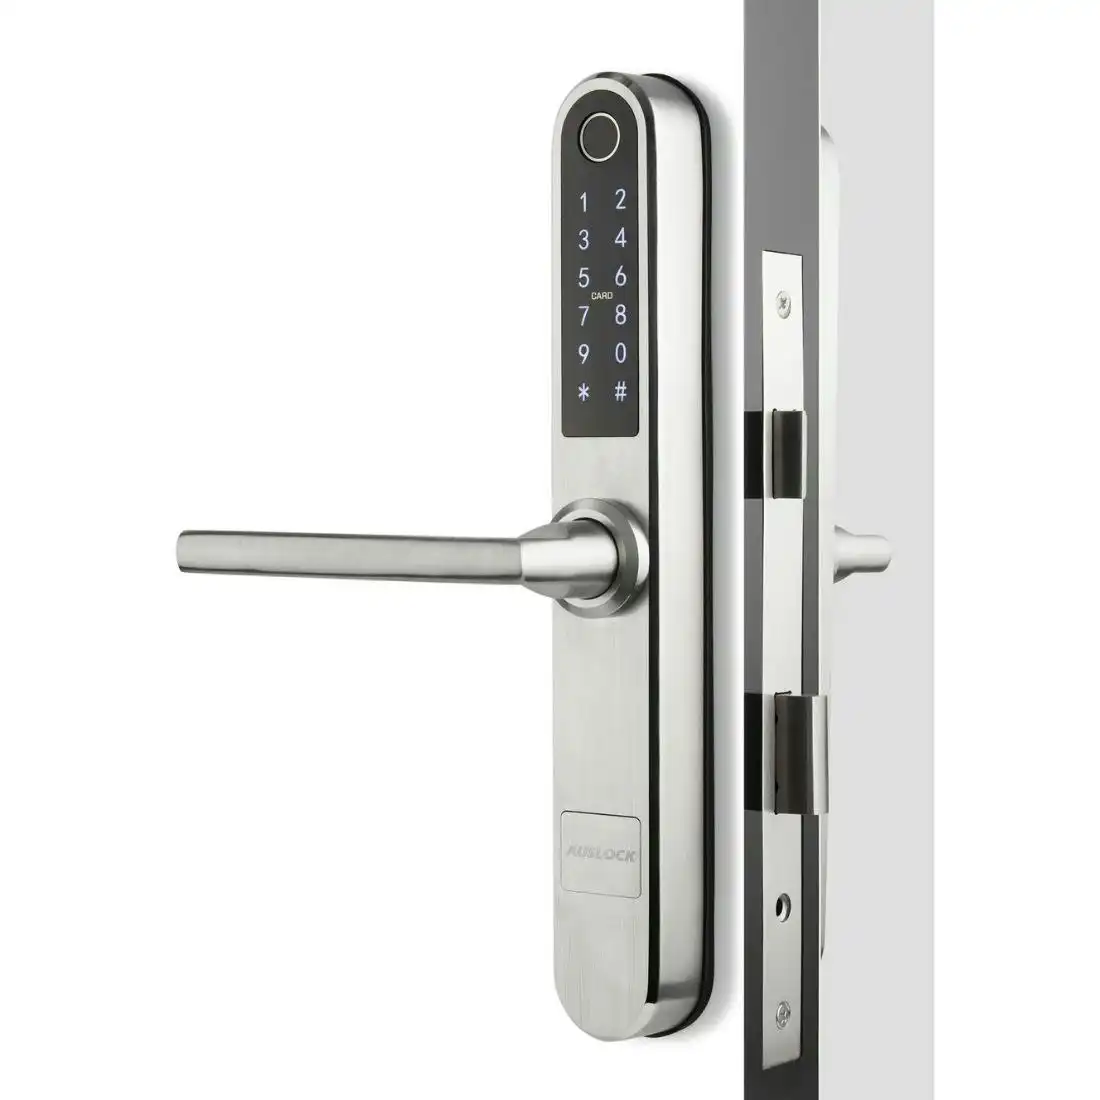 Auslock Slim Series S31B Ultra Slim (38mm) Smart Door Lock - Silver